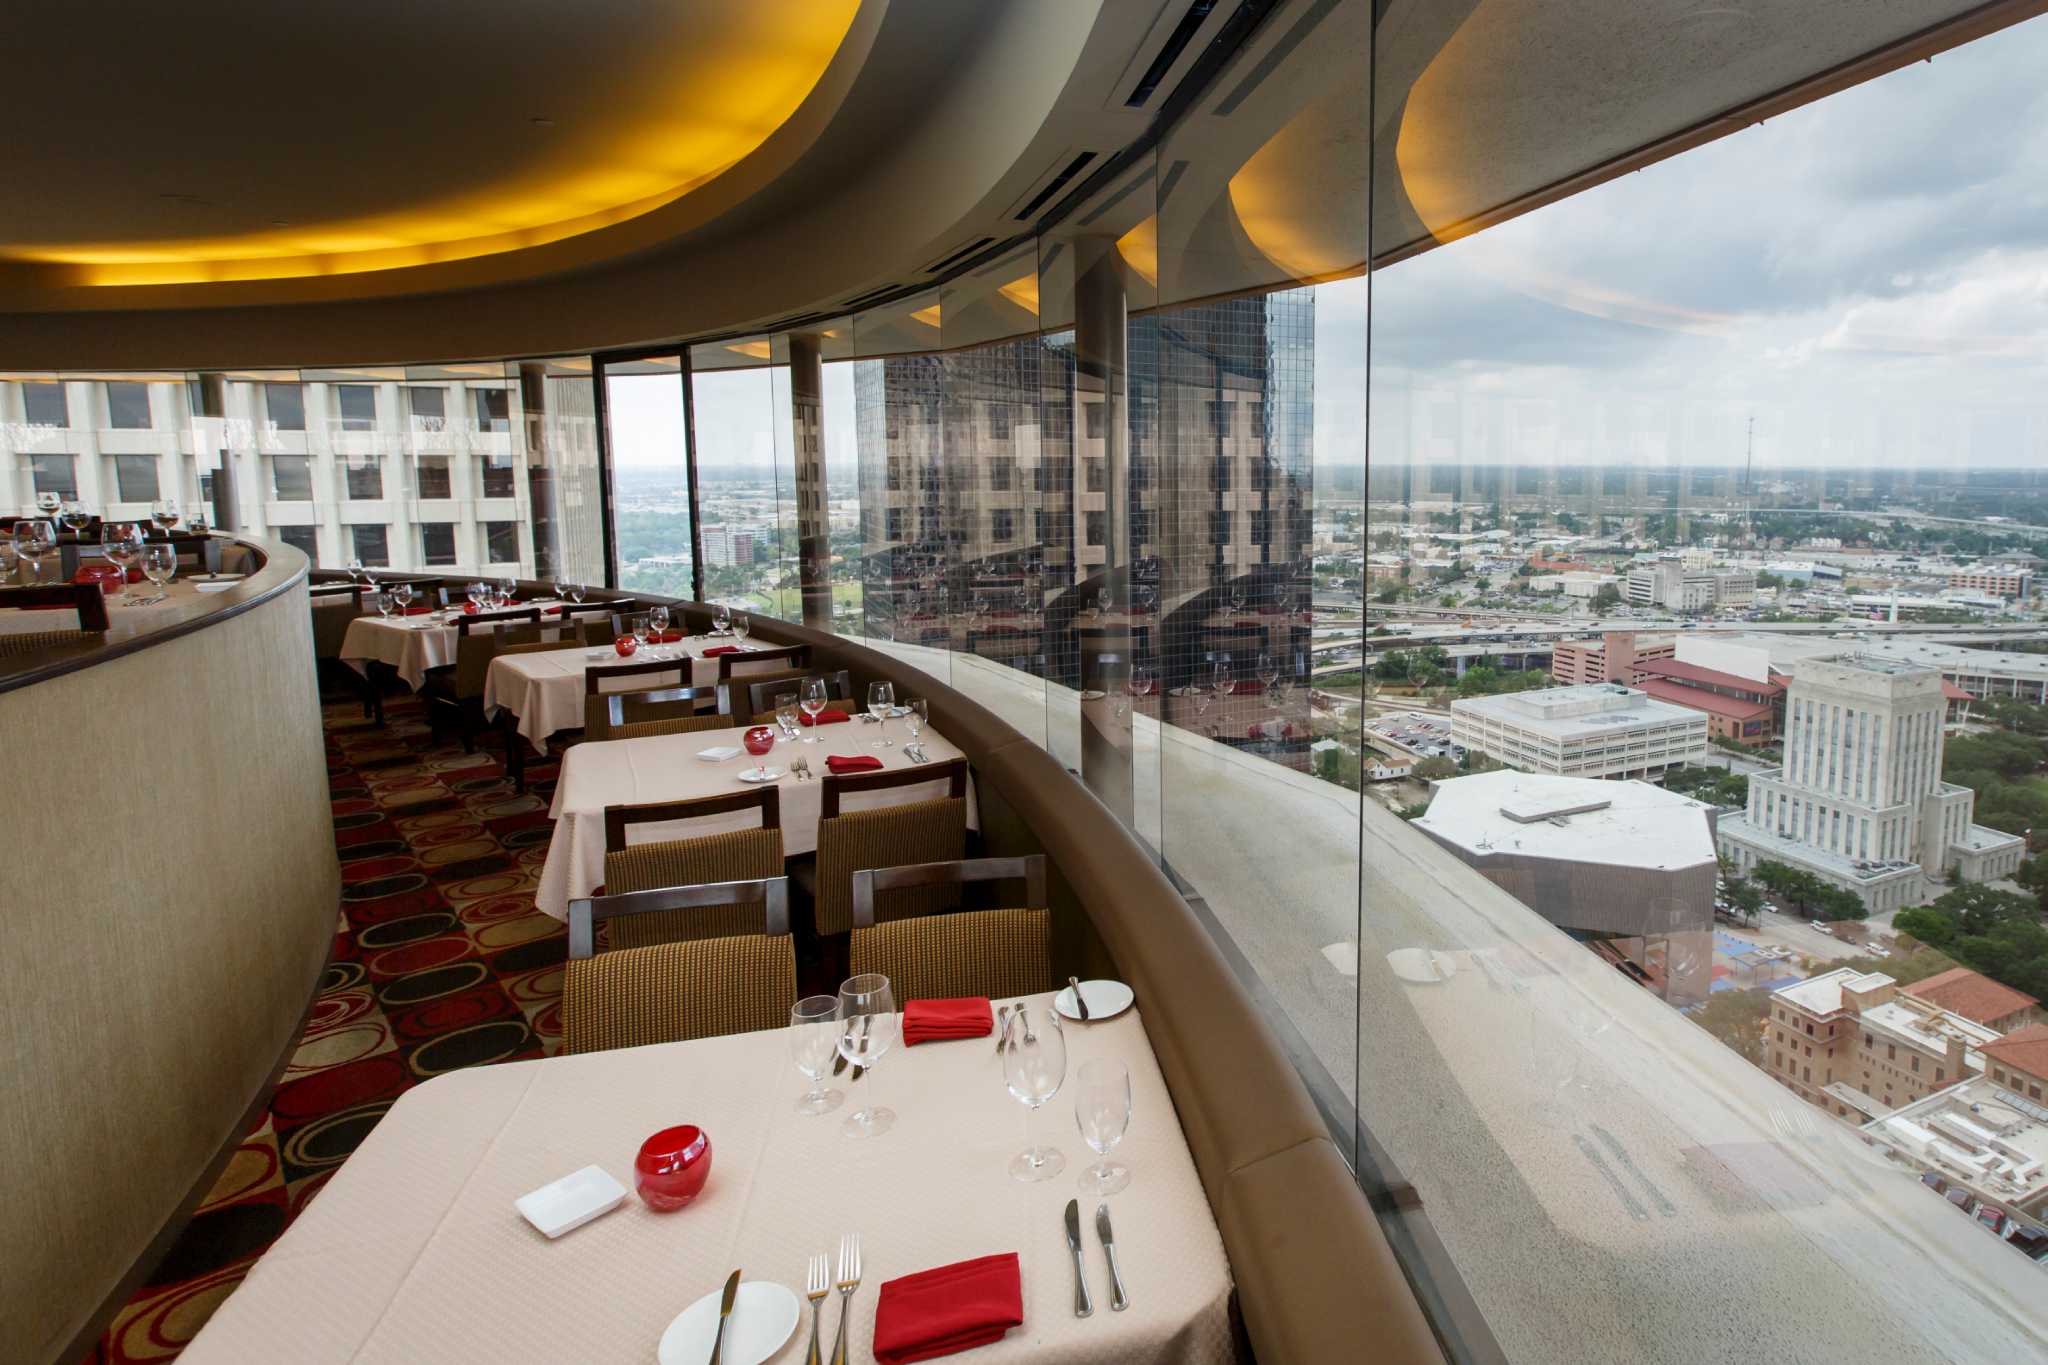 designbymvp: The Best Restaurants In Houston